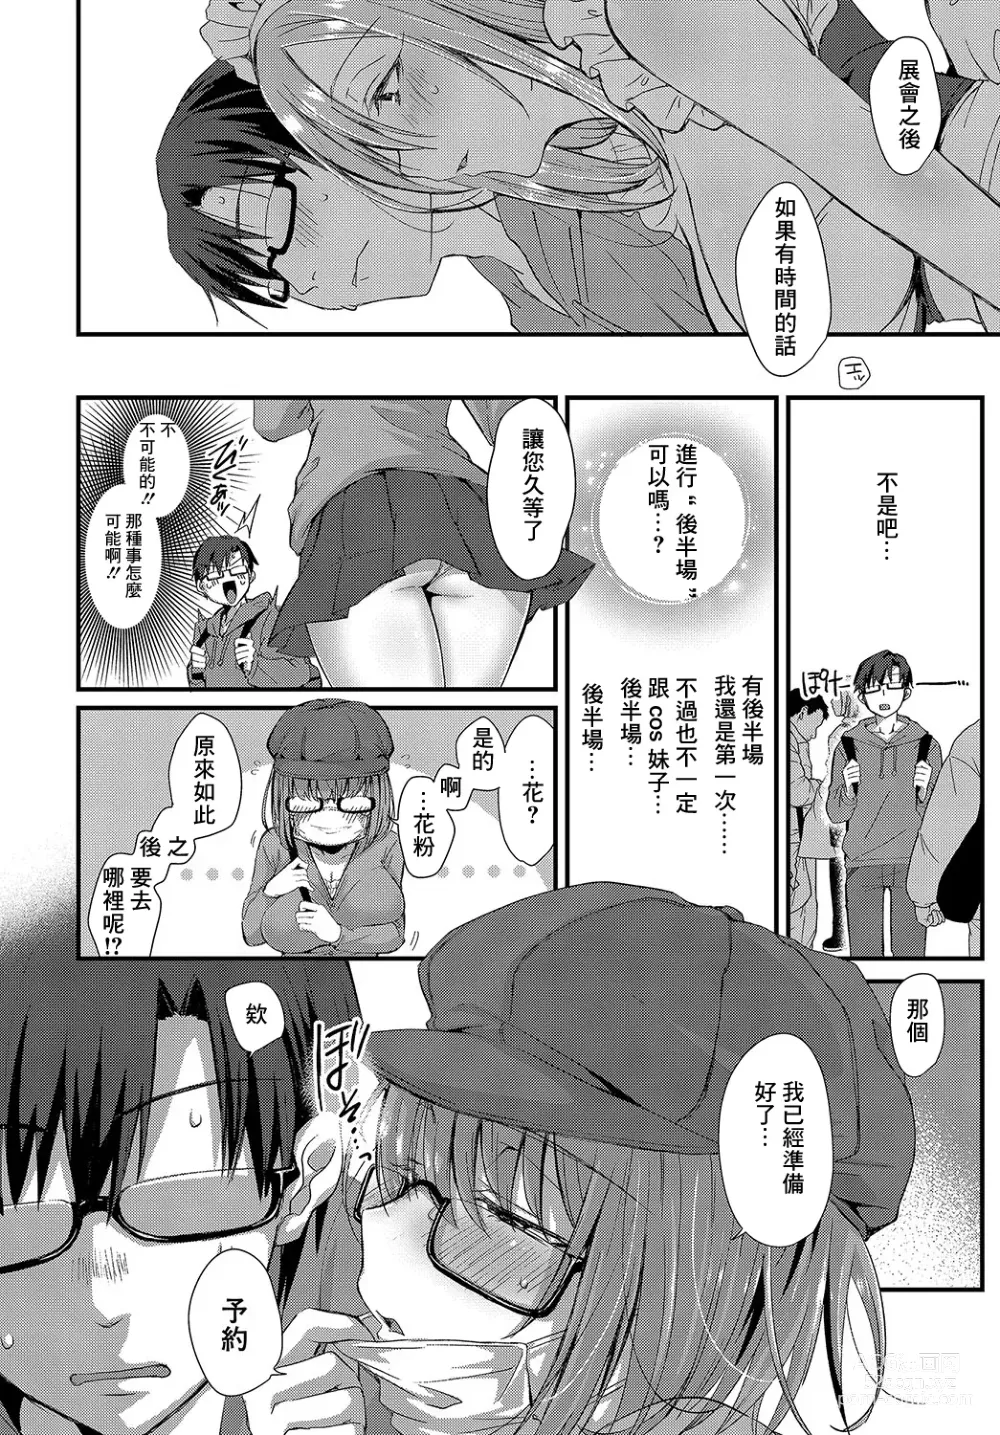 Page 4 of manga Junai Cos Maid